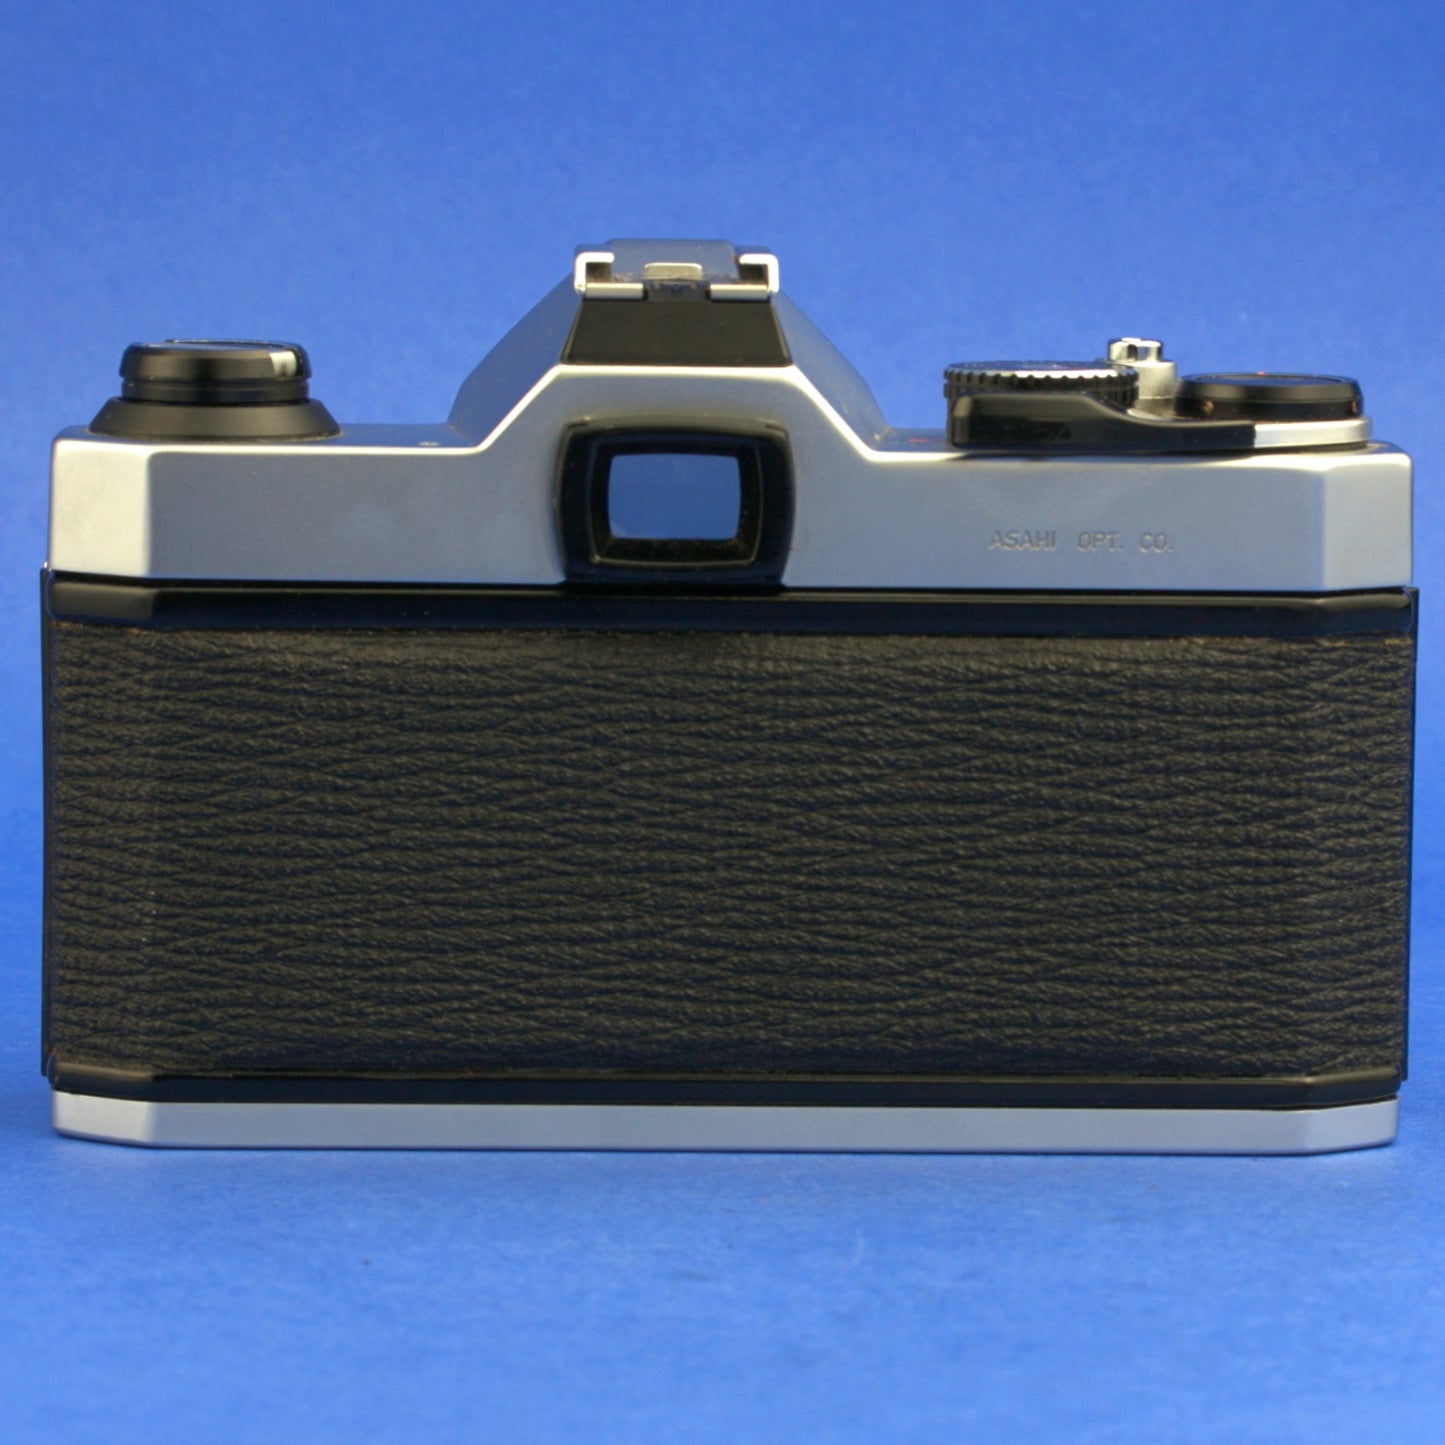 Pentax K1000 Film Camera with 50mm F2 Lens